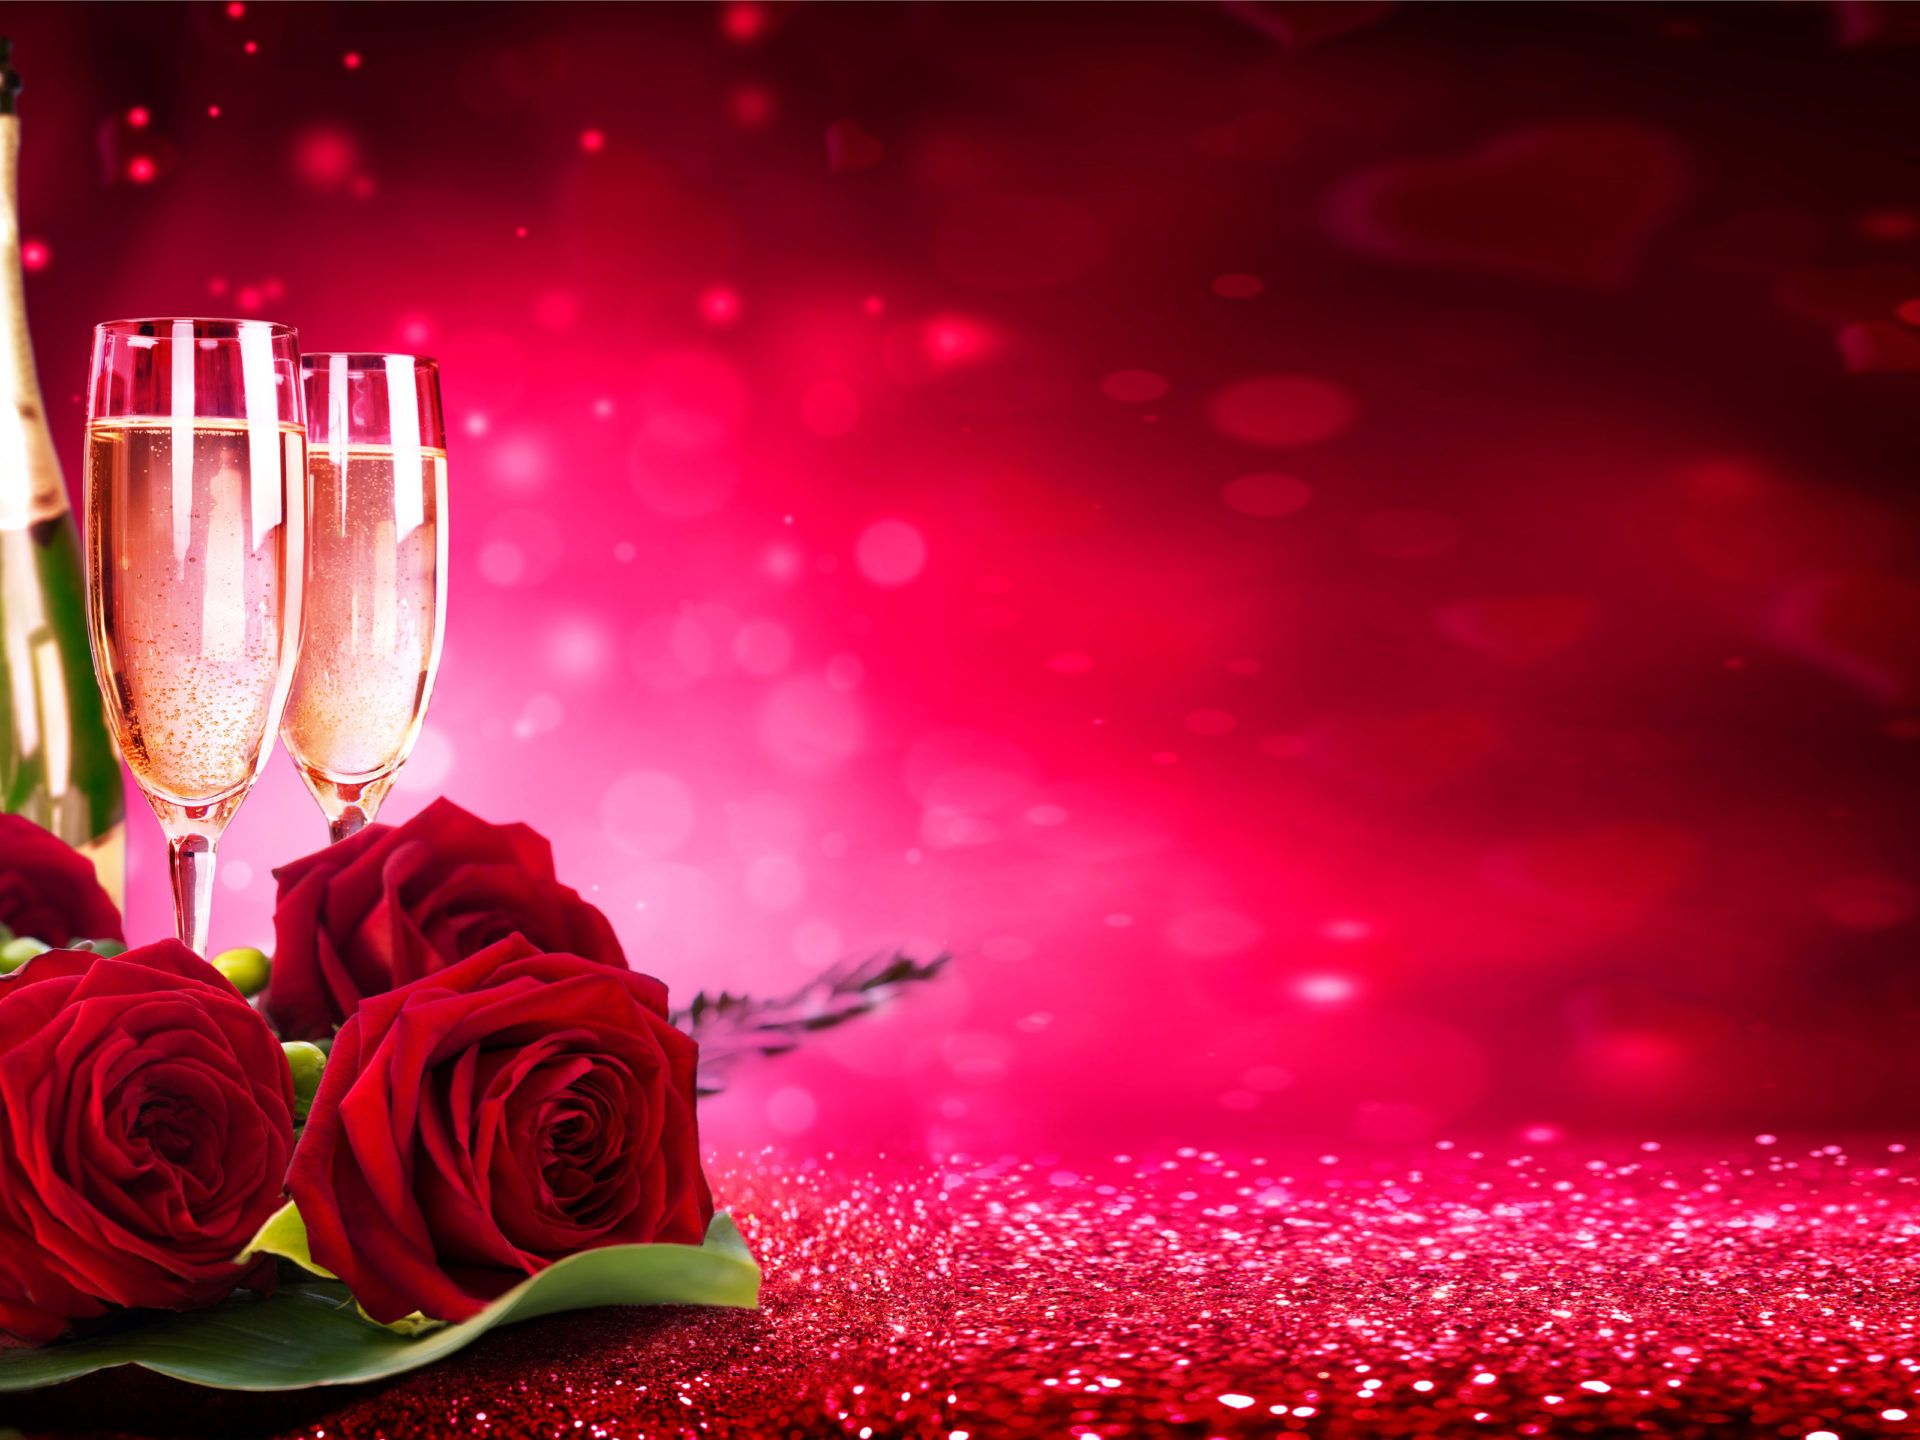 Valentine Champagne And Flower Red Roses HD Wallpaper Ultra HD 4k Wallpaper For Desktop & Mobiles 3840x2400, Wallpaper13.com